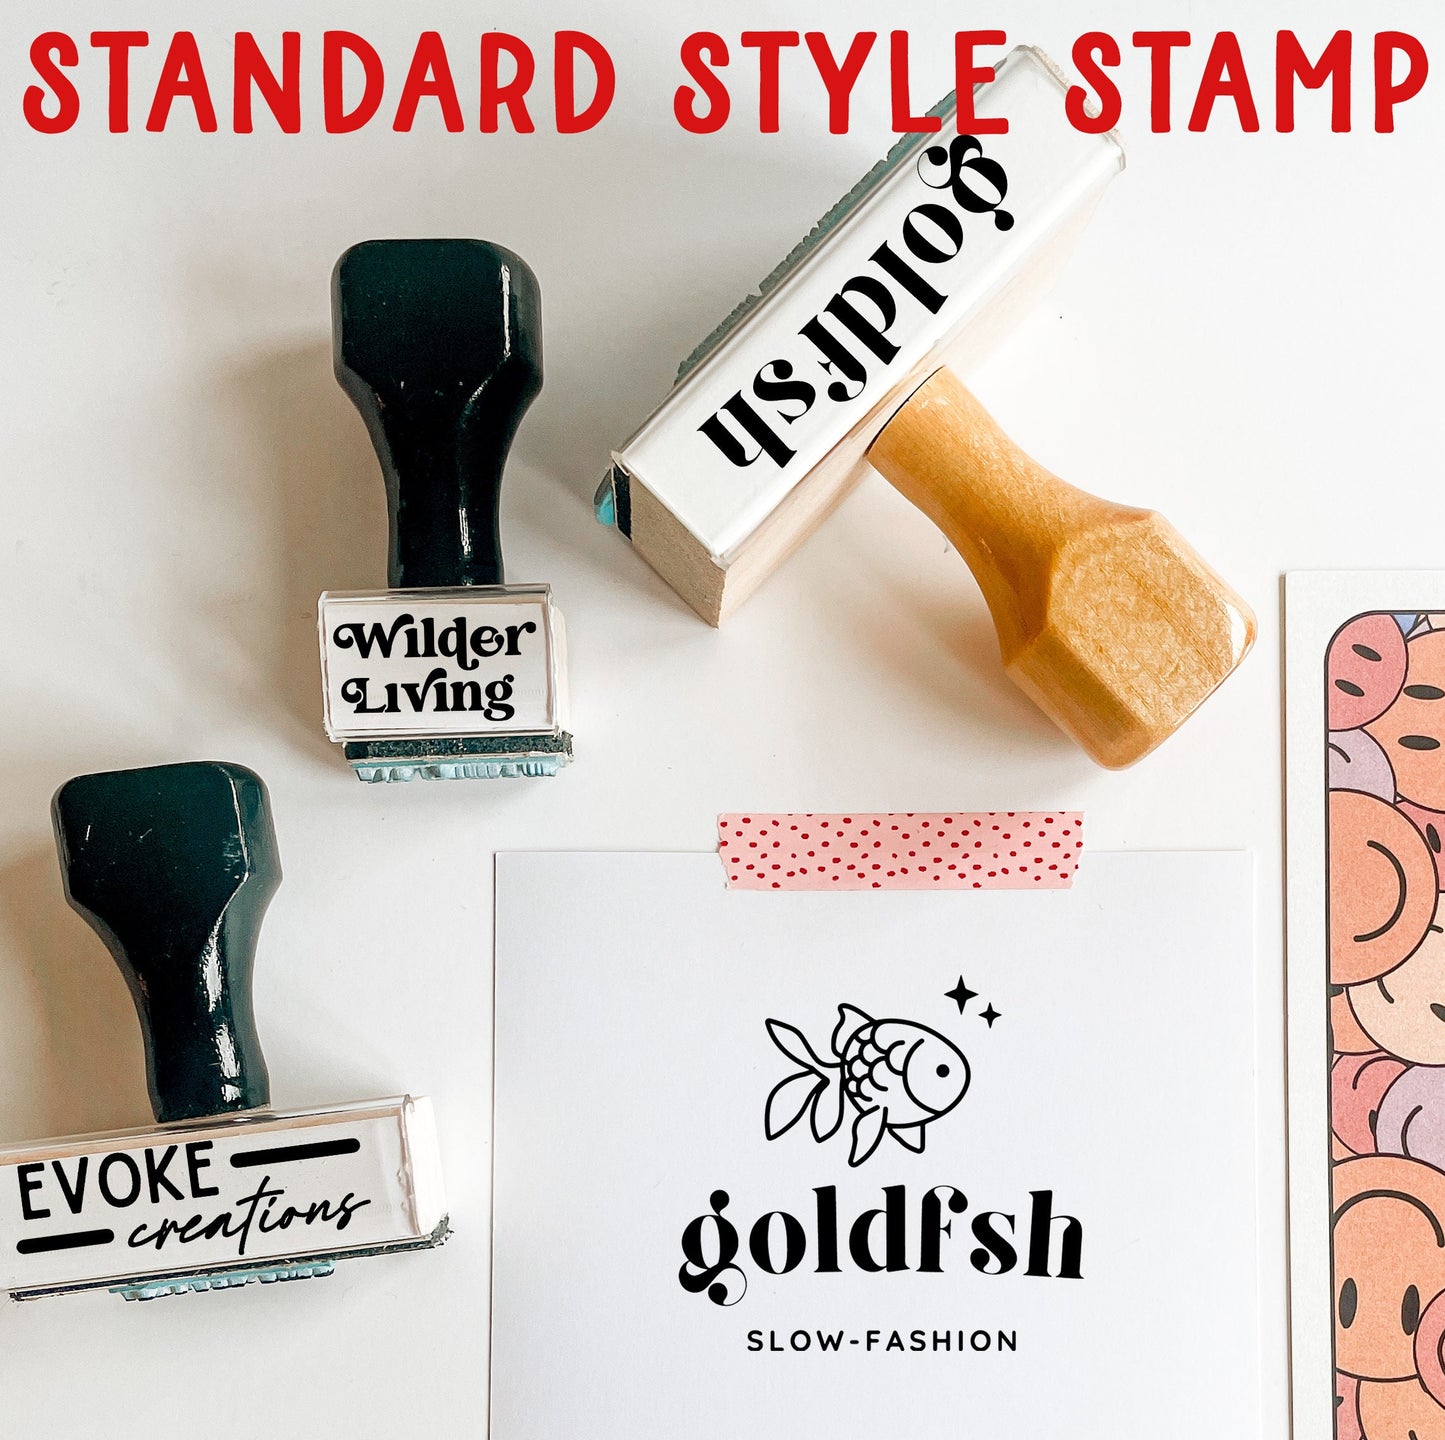 Custom Book Stamp, Library Book Stamp, Bookplate, Book label, Bookworm Accessories, Ex Libris Stamp, Book Stamper, Book Stamp Personalized